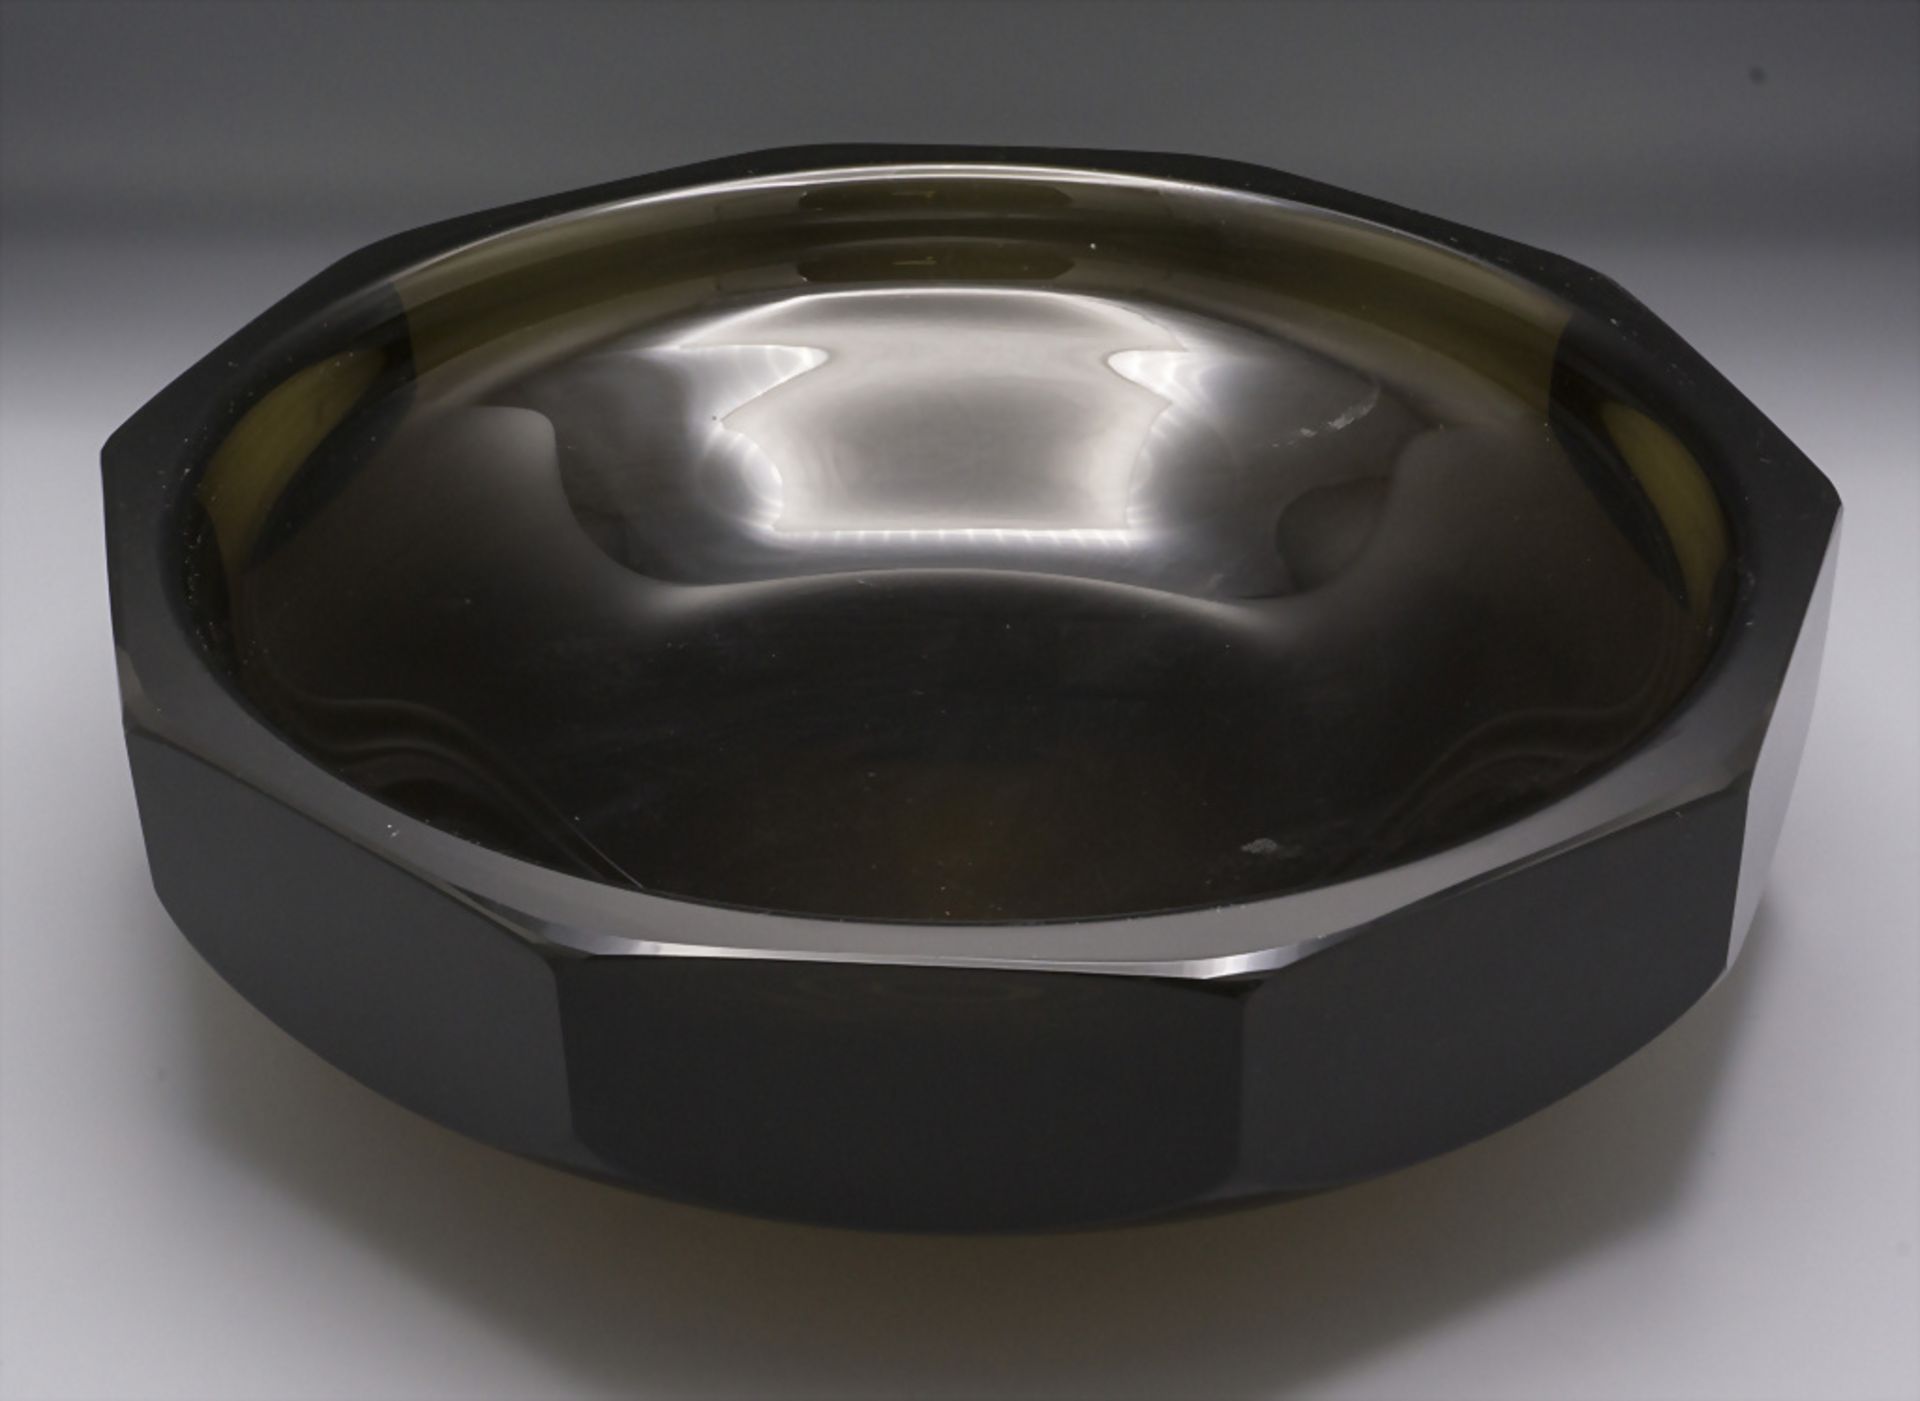 Rauchglas Schale / A smoked glass bowl, Daum, Frankreich, 20. Jh.